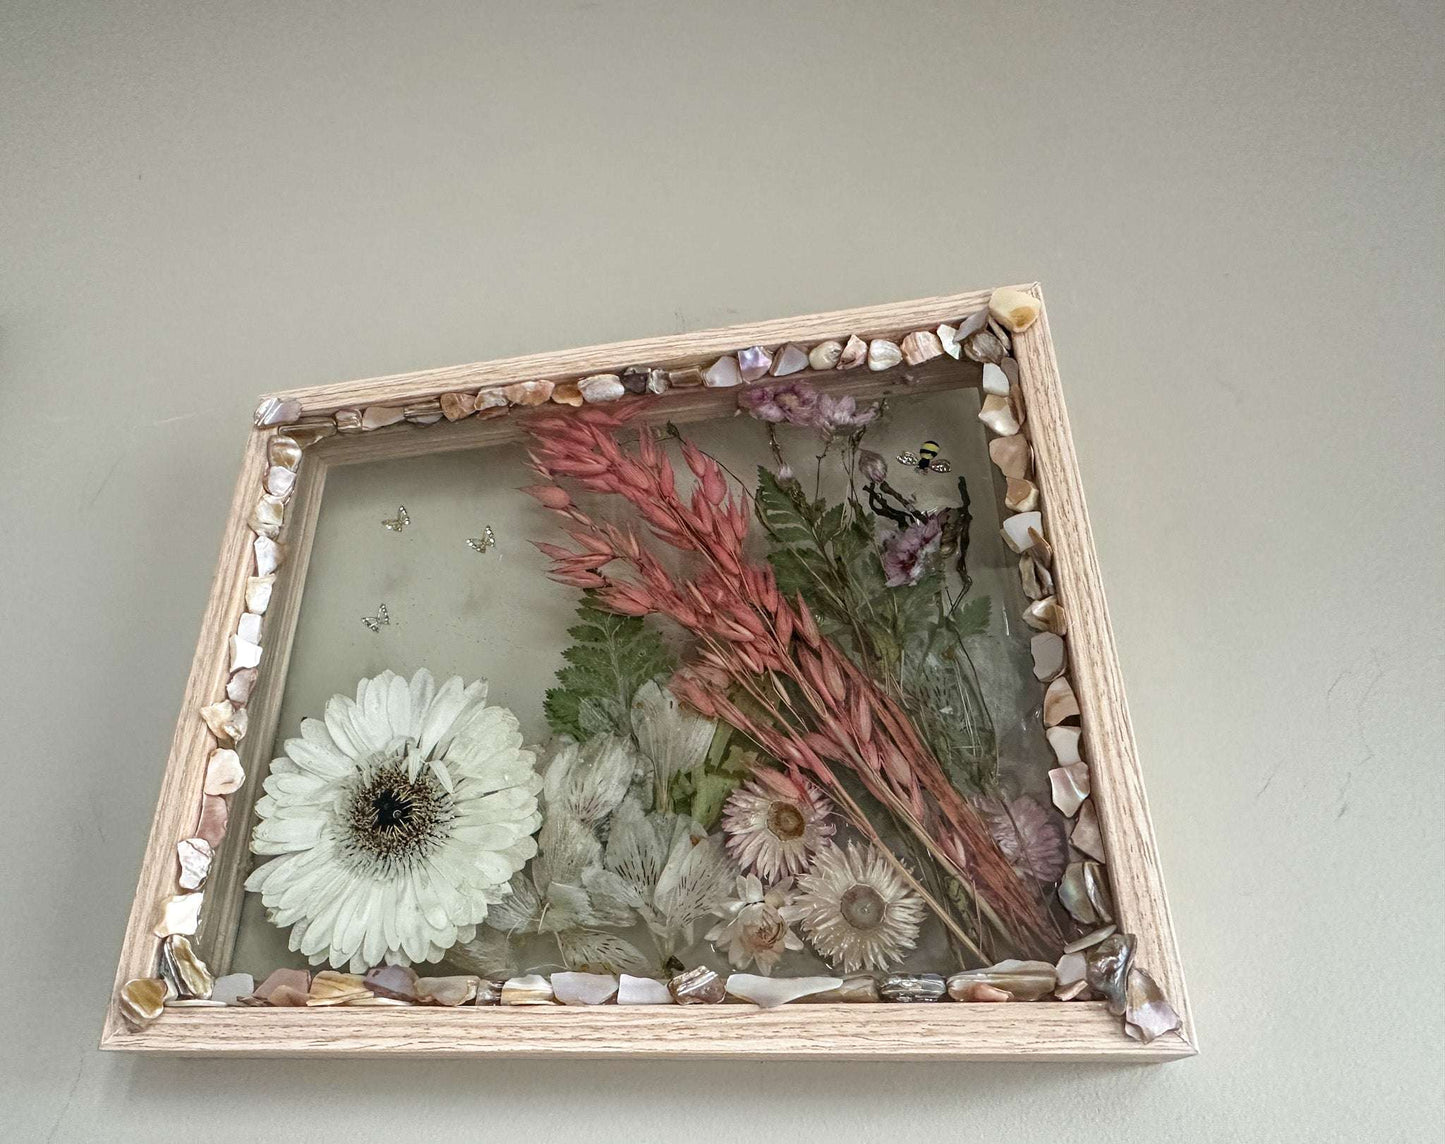 Everlasting Blooms - Handmade Real Pressed Floral Garden Picture Frame